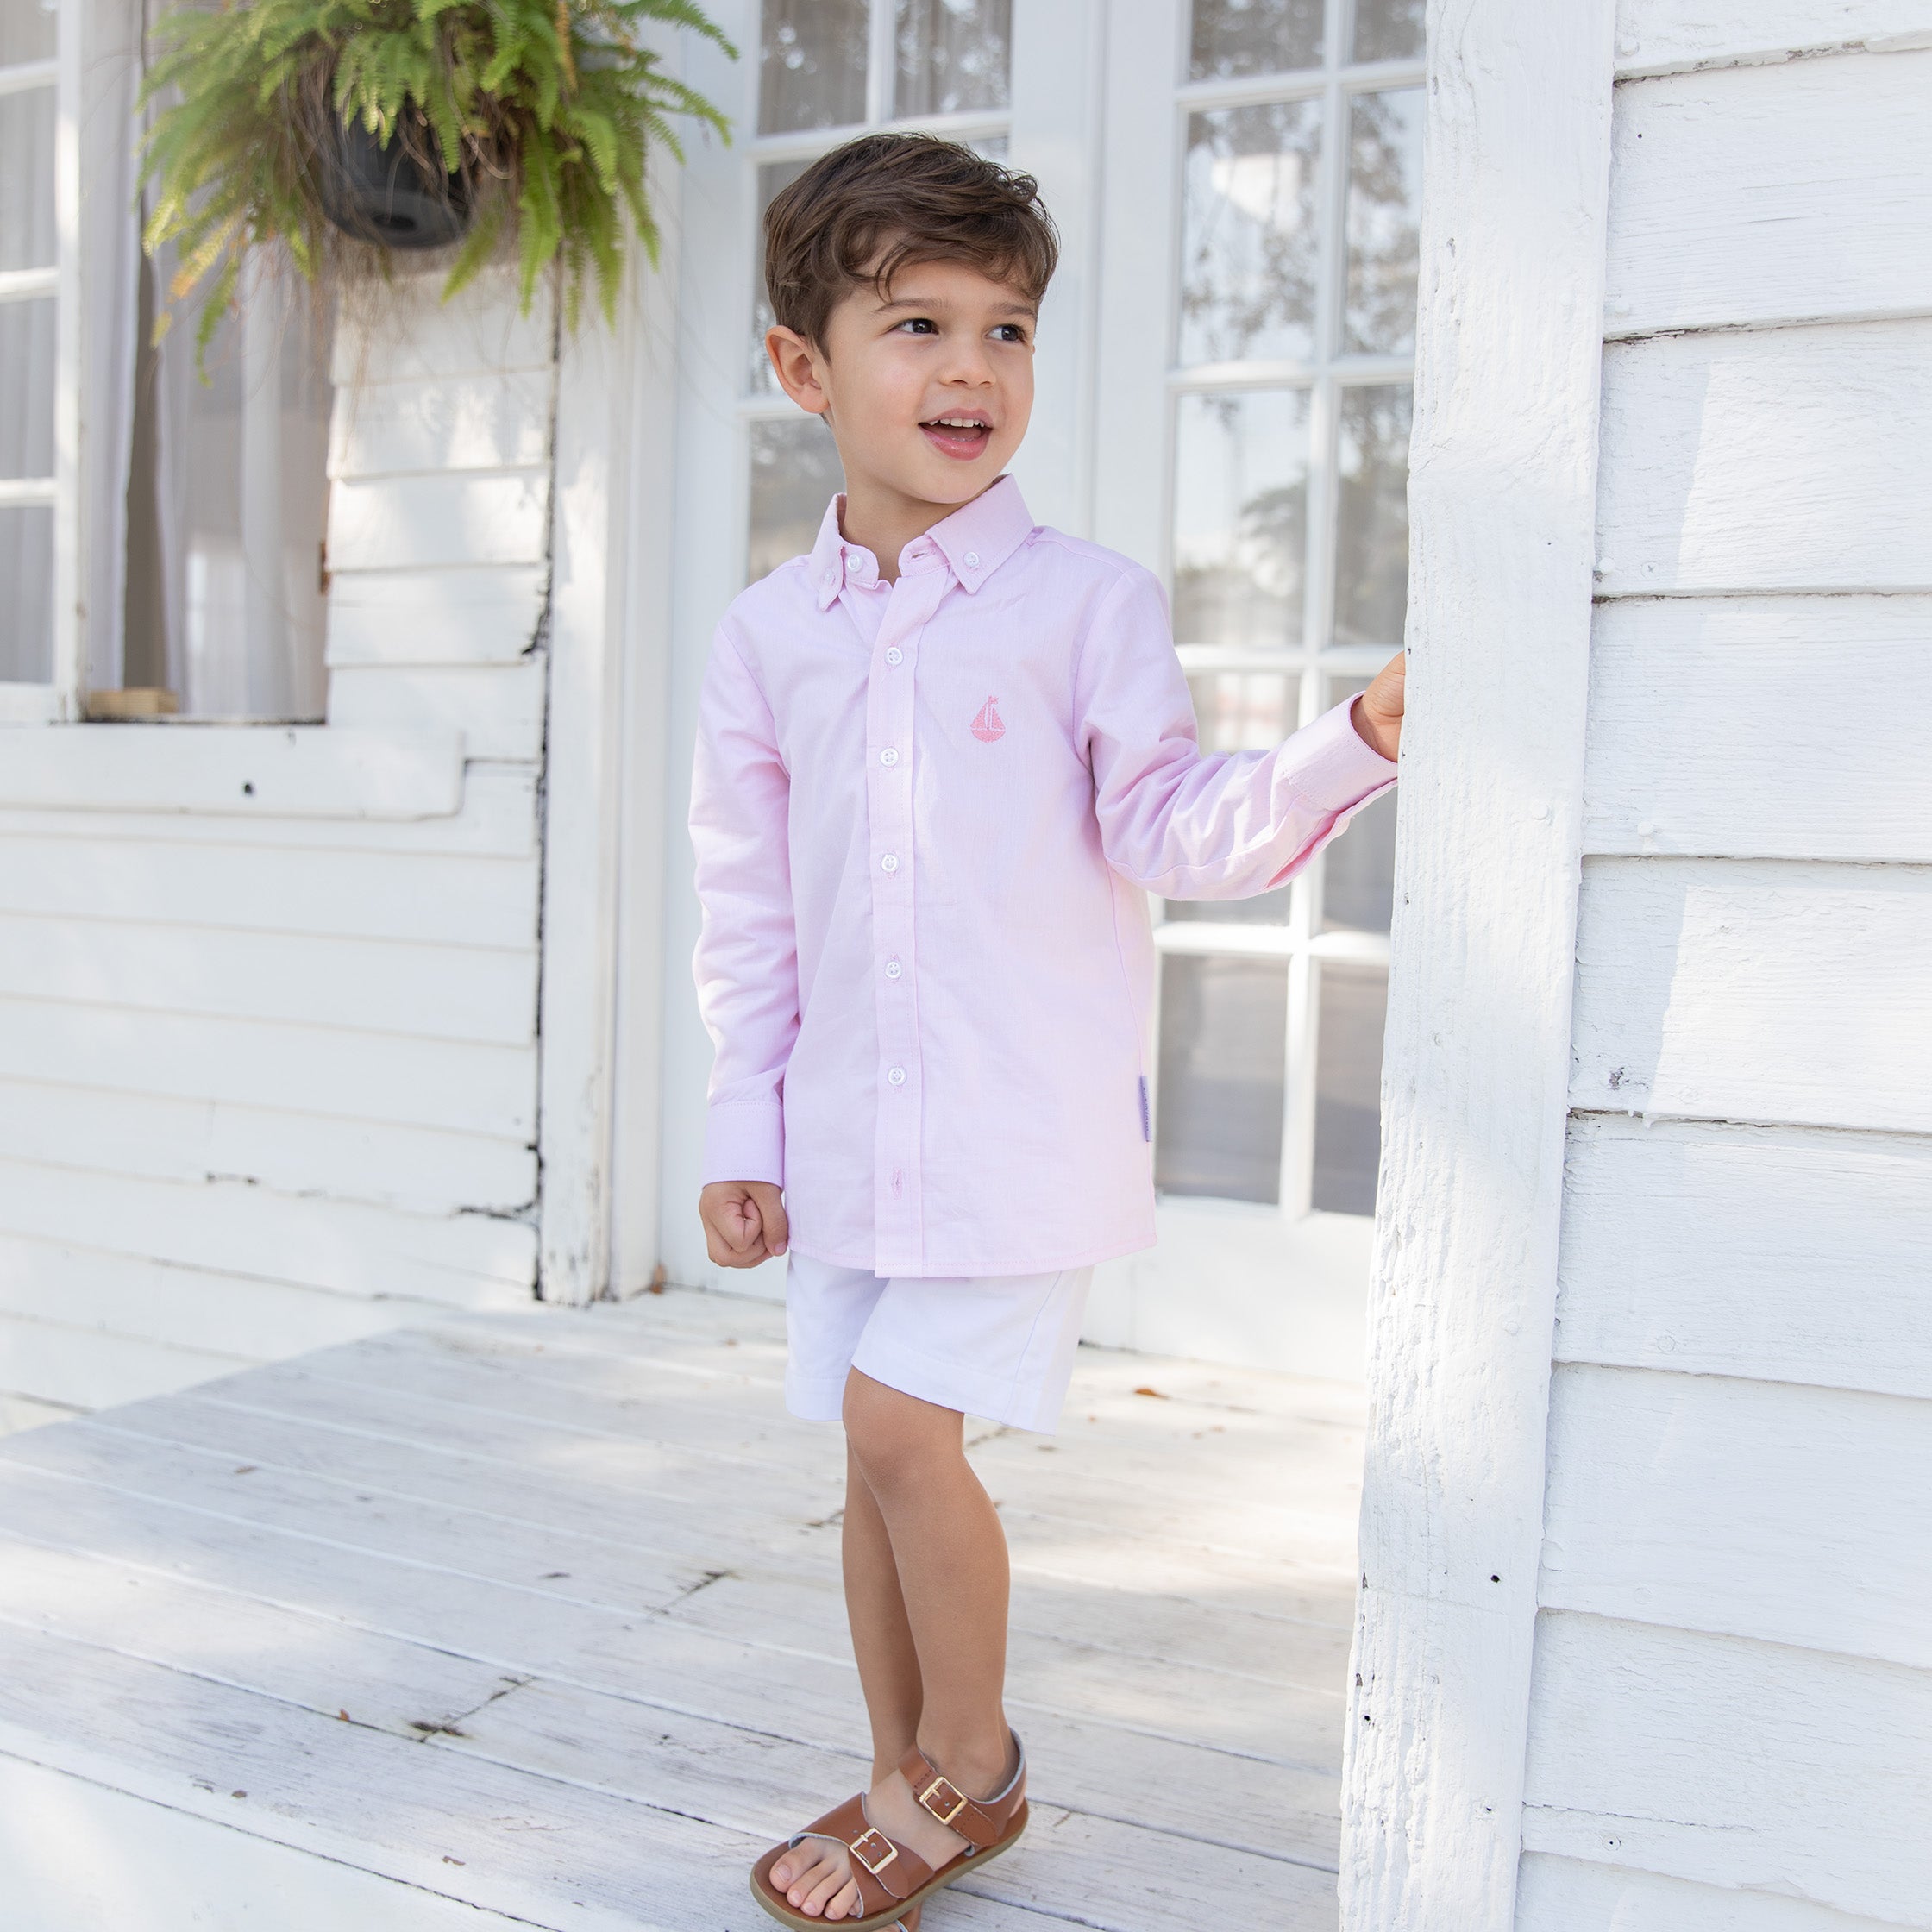 Toddler Dress Shirt - Chambray or White Monogrammed Oxfords